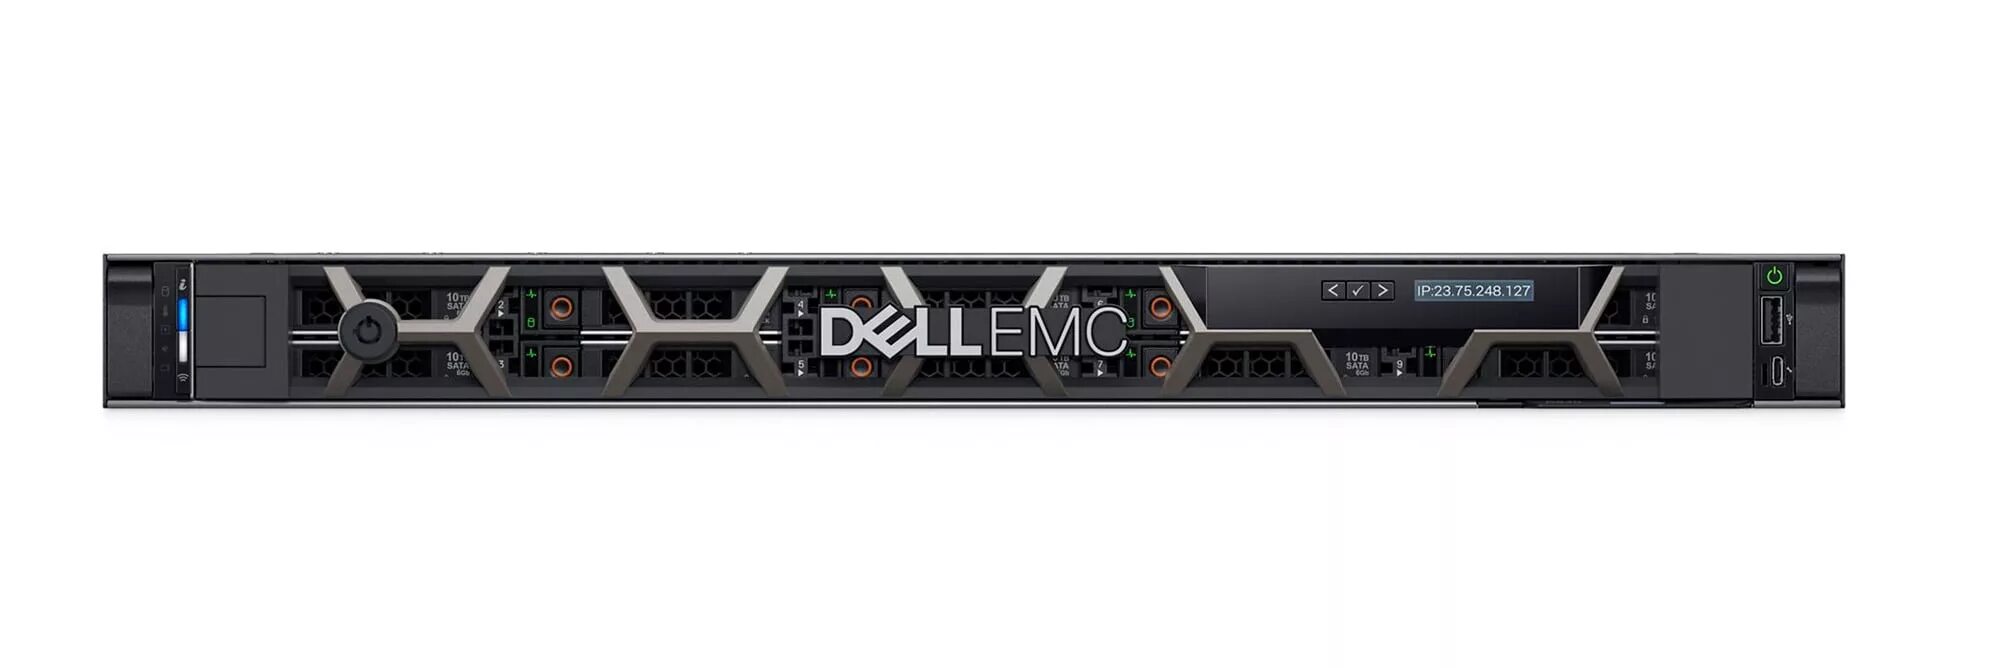 Dell EMC POWEREDGE r440. Dell EMC r640. Dell EMC POWEREDGE r640. Серверы dell r640.